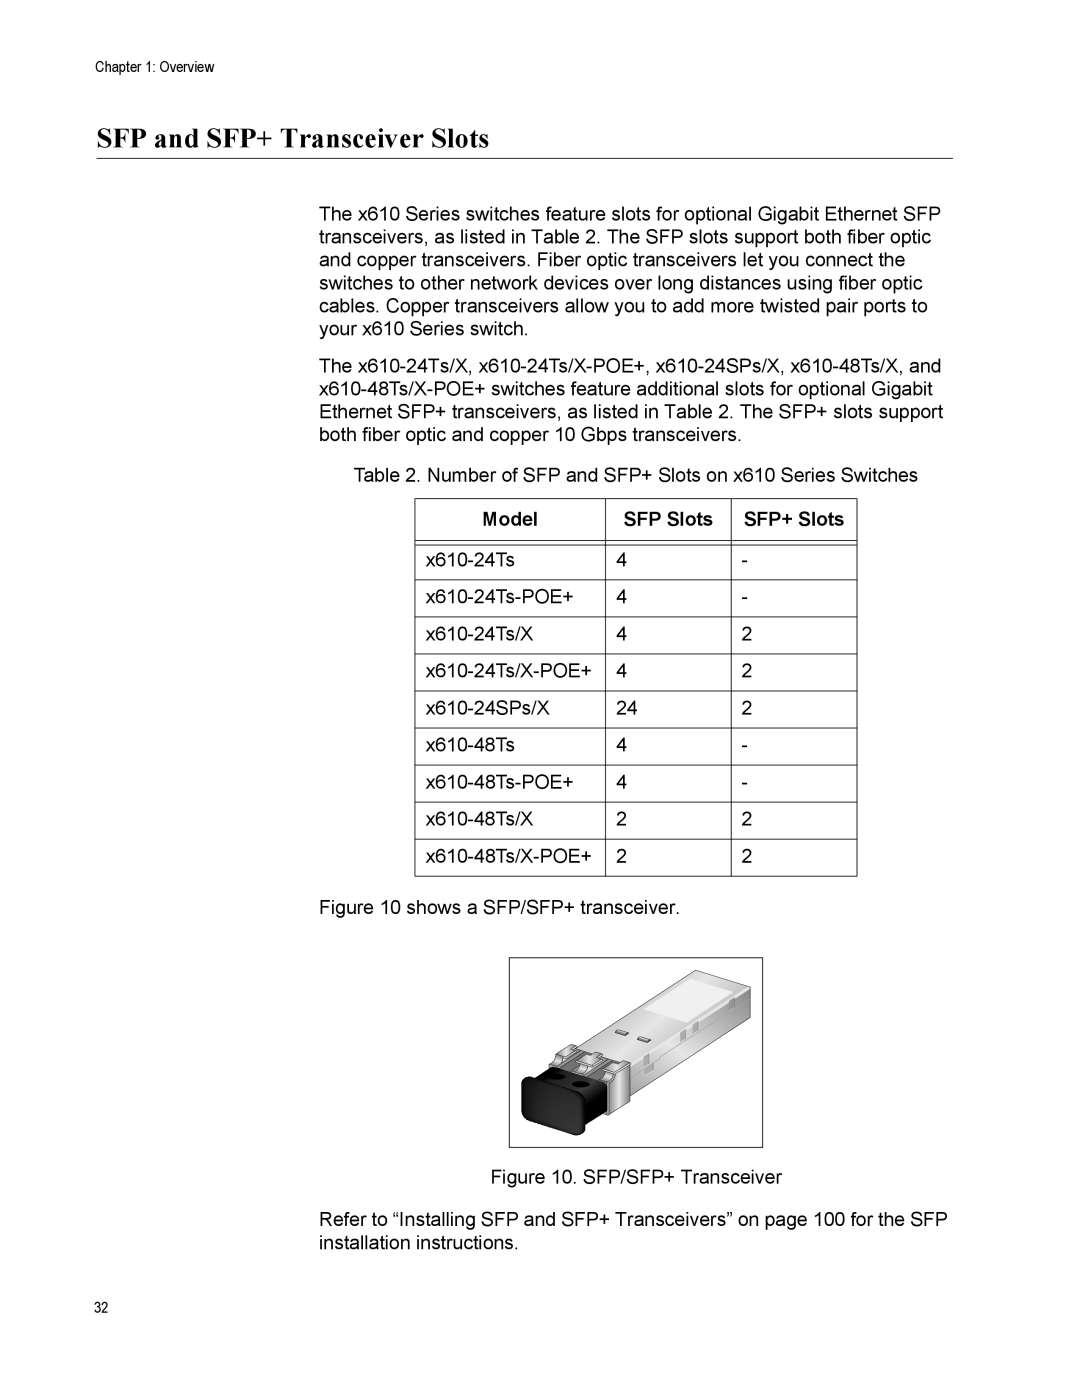 Allied Telesis X610-24TS/X-POE+, X610-48TS-POE+, X610-48TS/X SFP and SFP+ Transceiver Slots, Model, SFP Slots, SFP+ Slots 